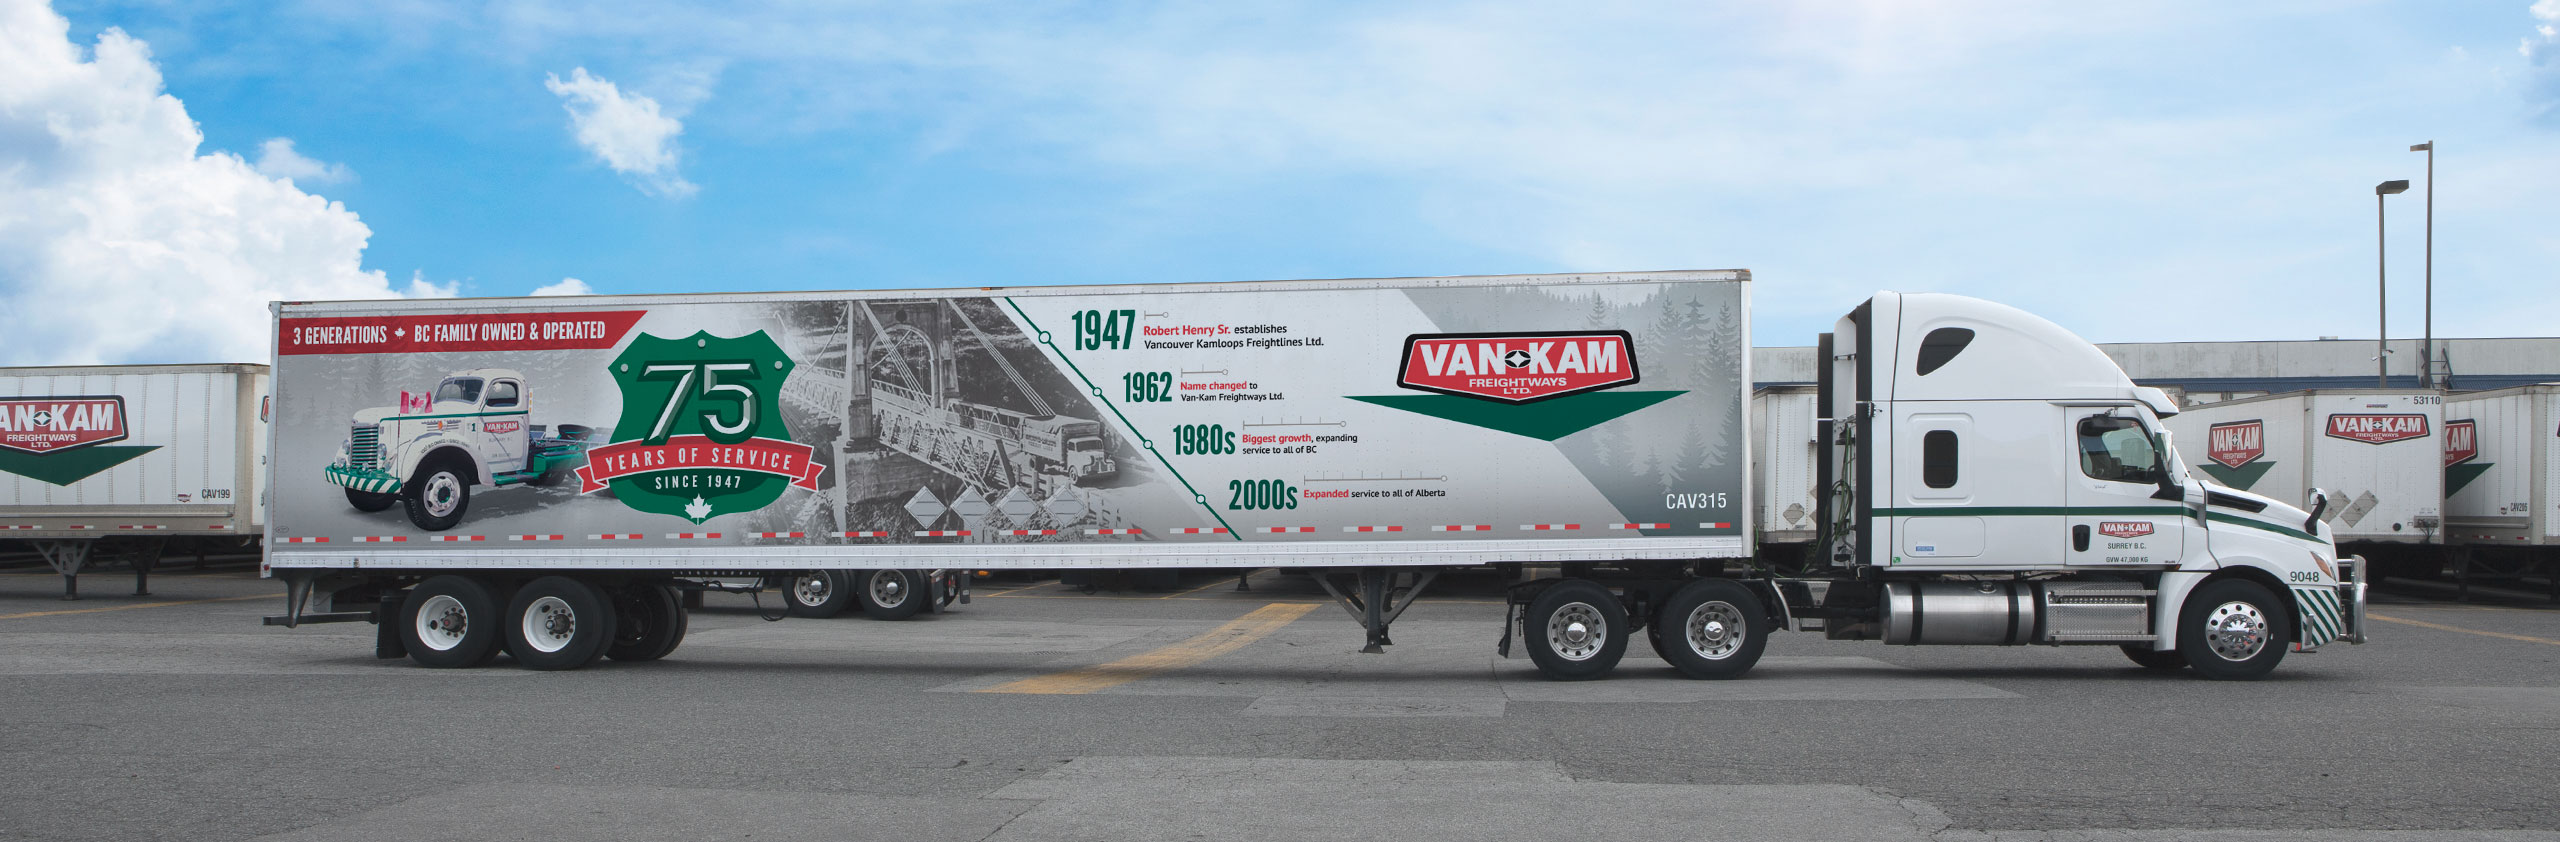 Side view of Van Kam highway truck with 75th anniversary trailer in yard